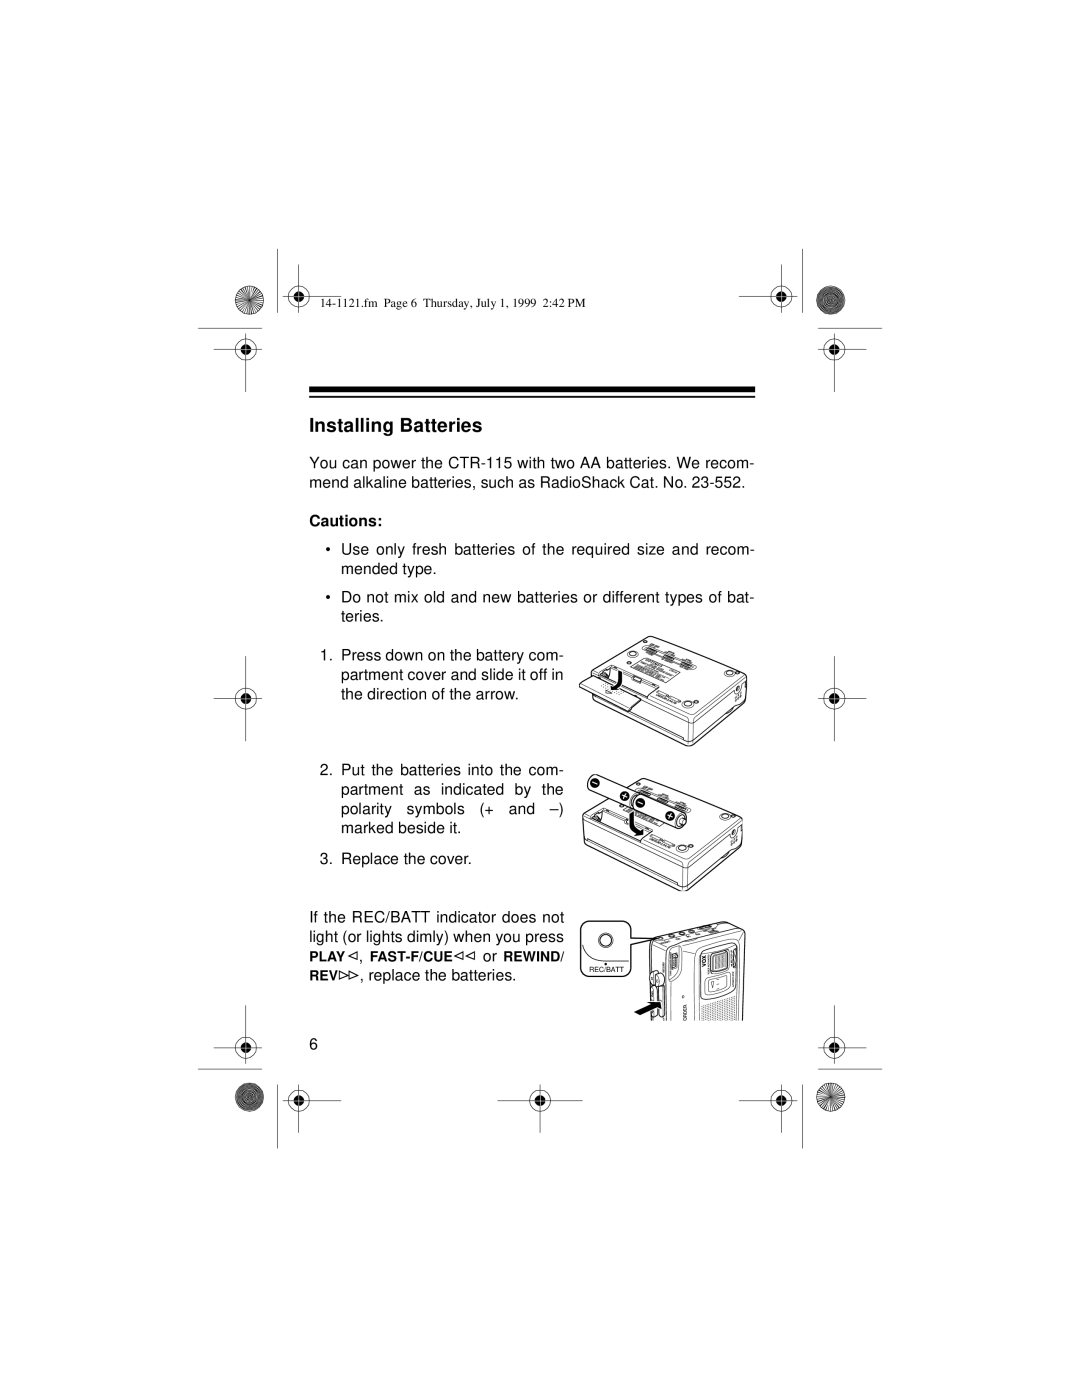 Optimus CTR-115, 14-1121, 2133-920-0-01 owner manual Installing Batteries, Cautions 